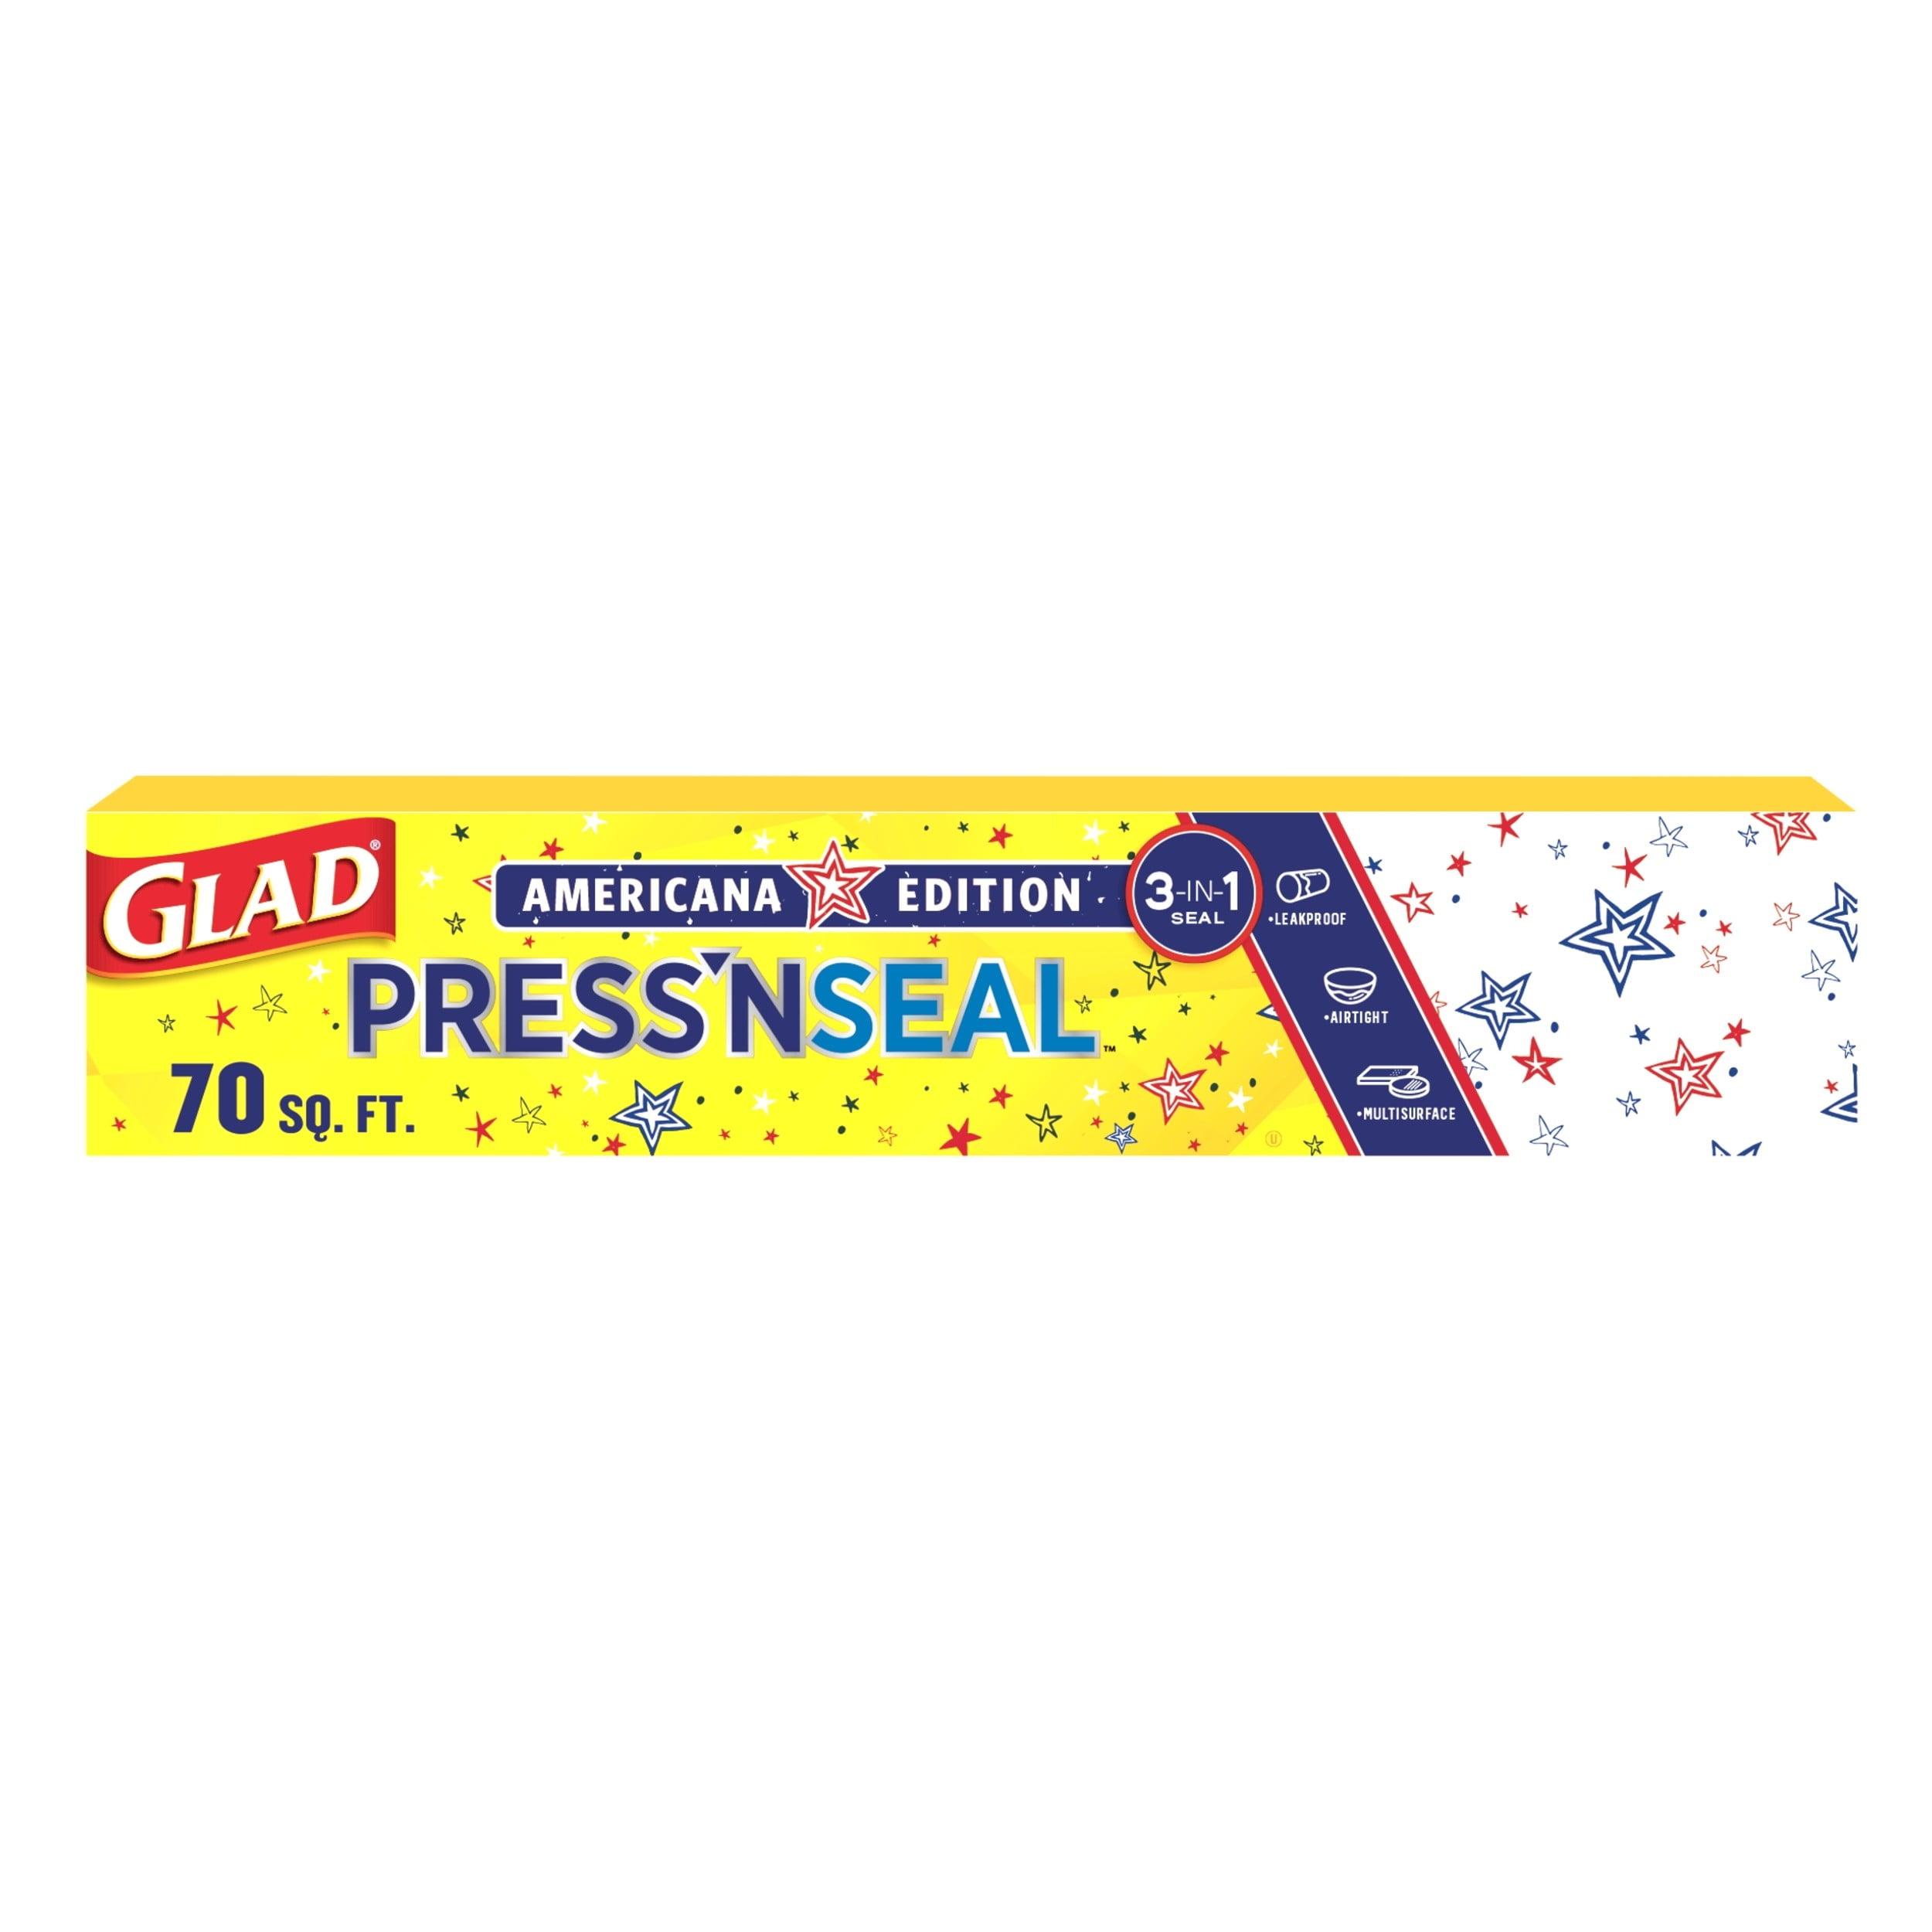 Glad Press 'n Seal Wrap (2-Pack, 70 sq. ft. each - Total 140 sq. ft.) –  SHANULKA Home Decor